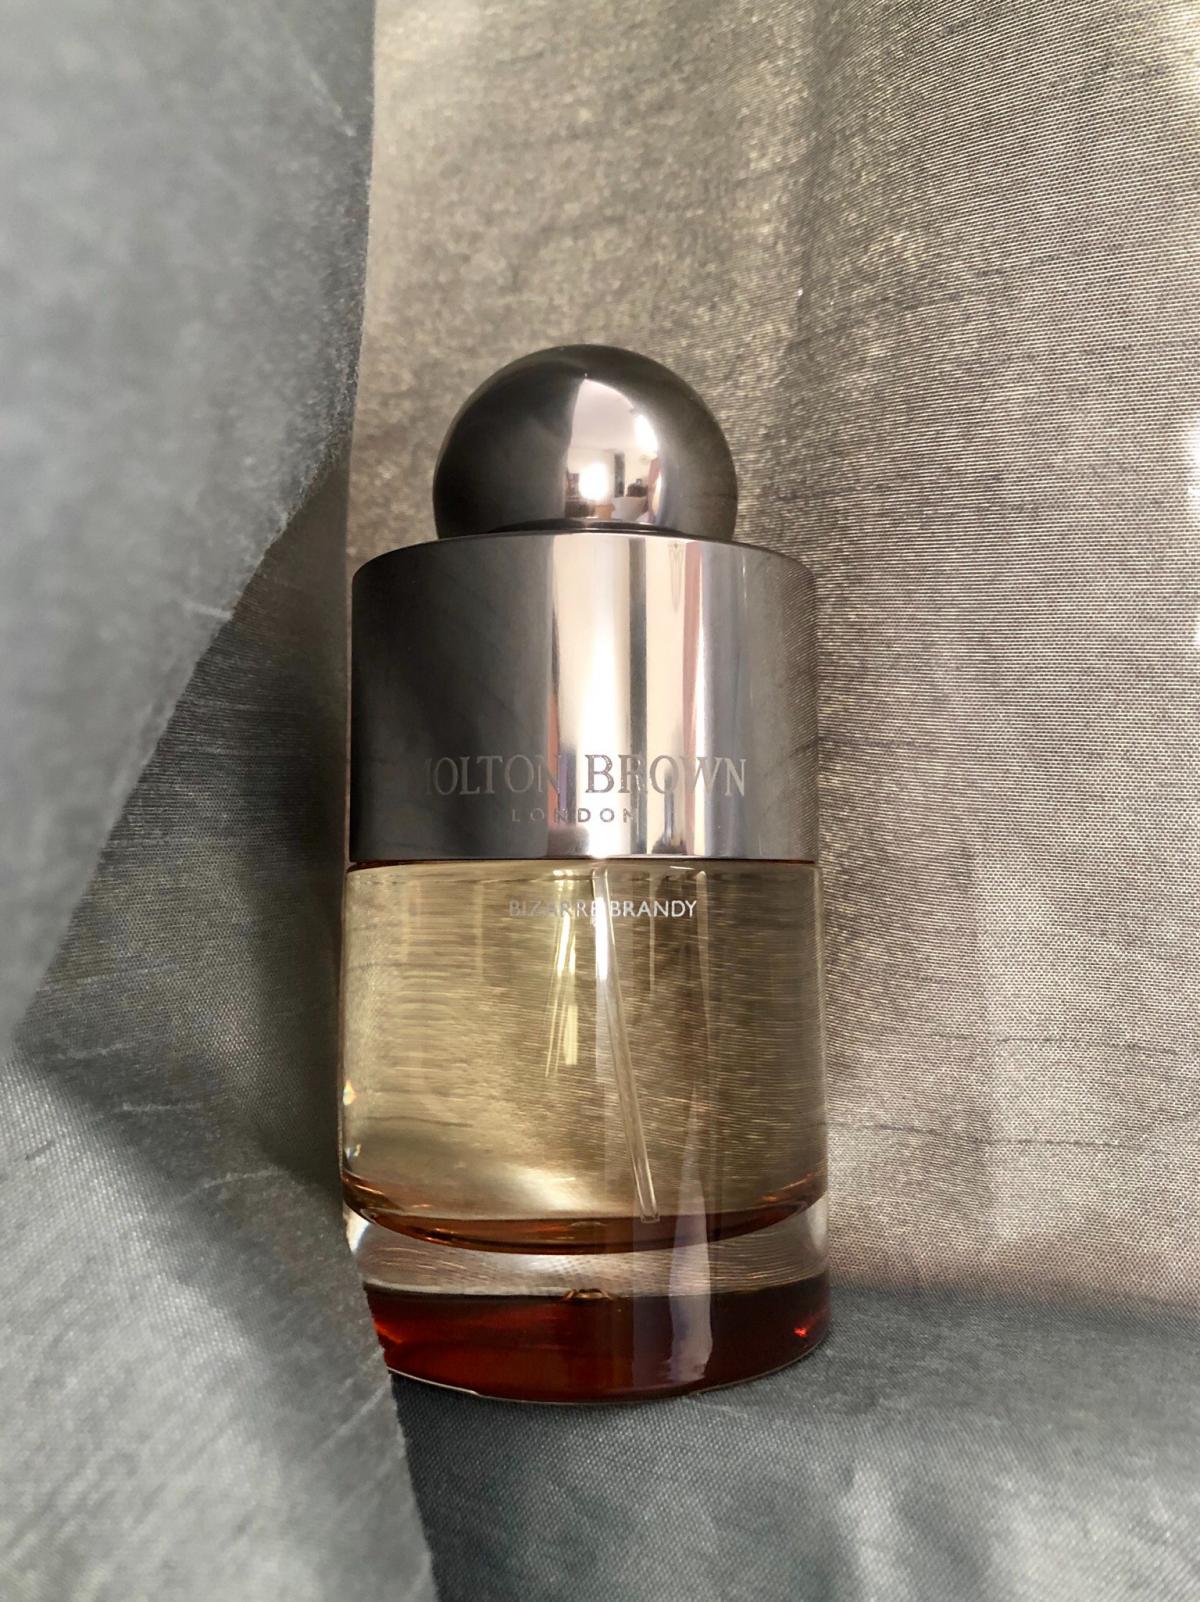 Bizarre Brandy Molton Brown perfume - a fragrance for women and men 2019